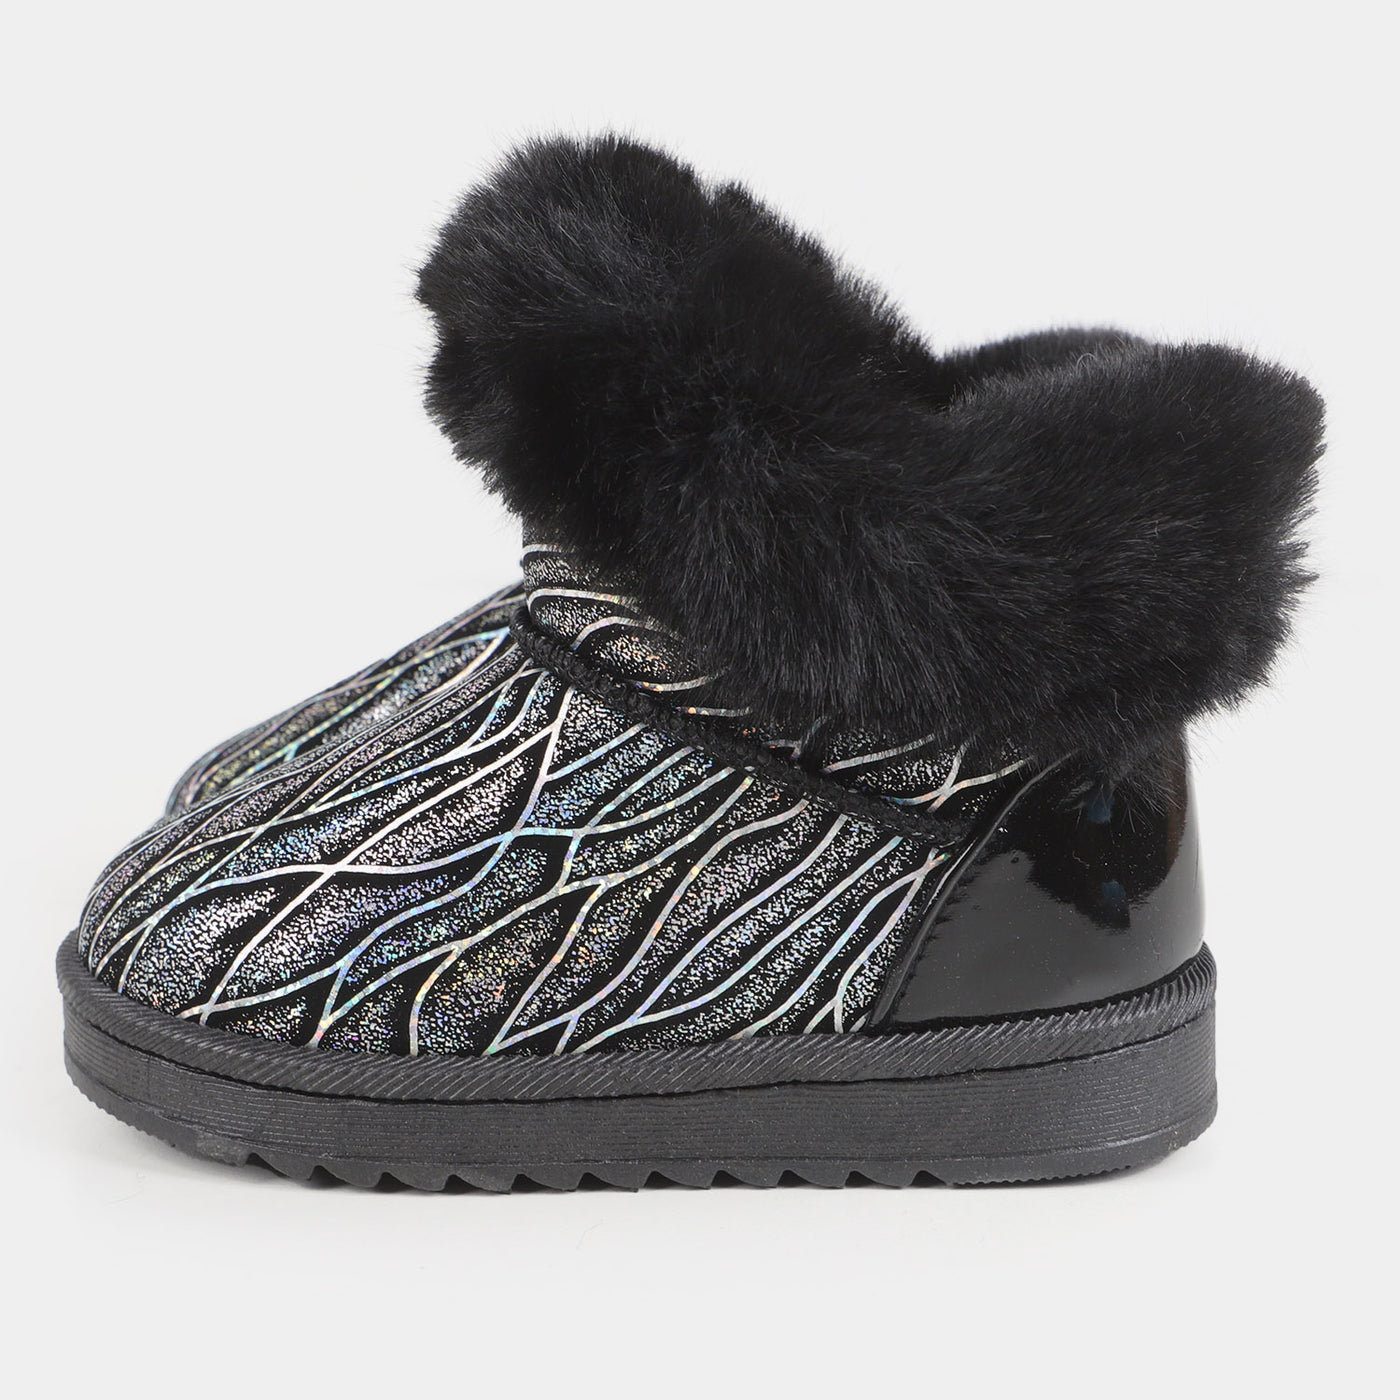 Girls Winter Snow Long Boots 2108 - BLACK